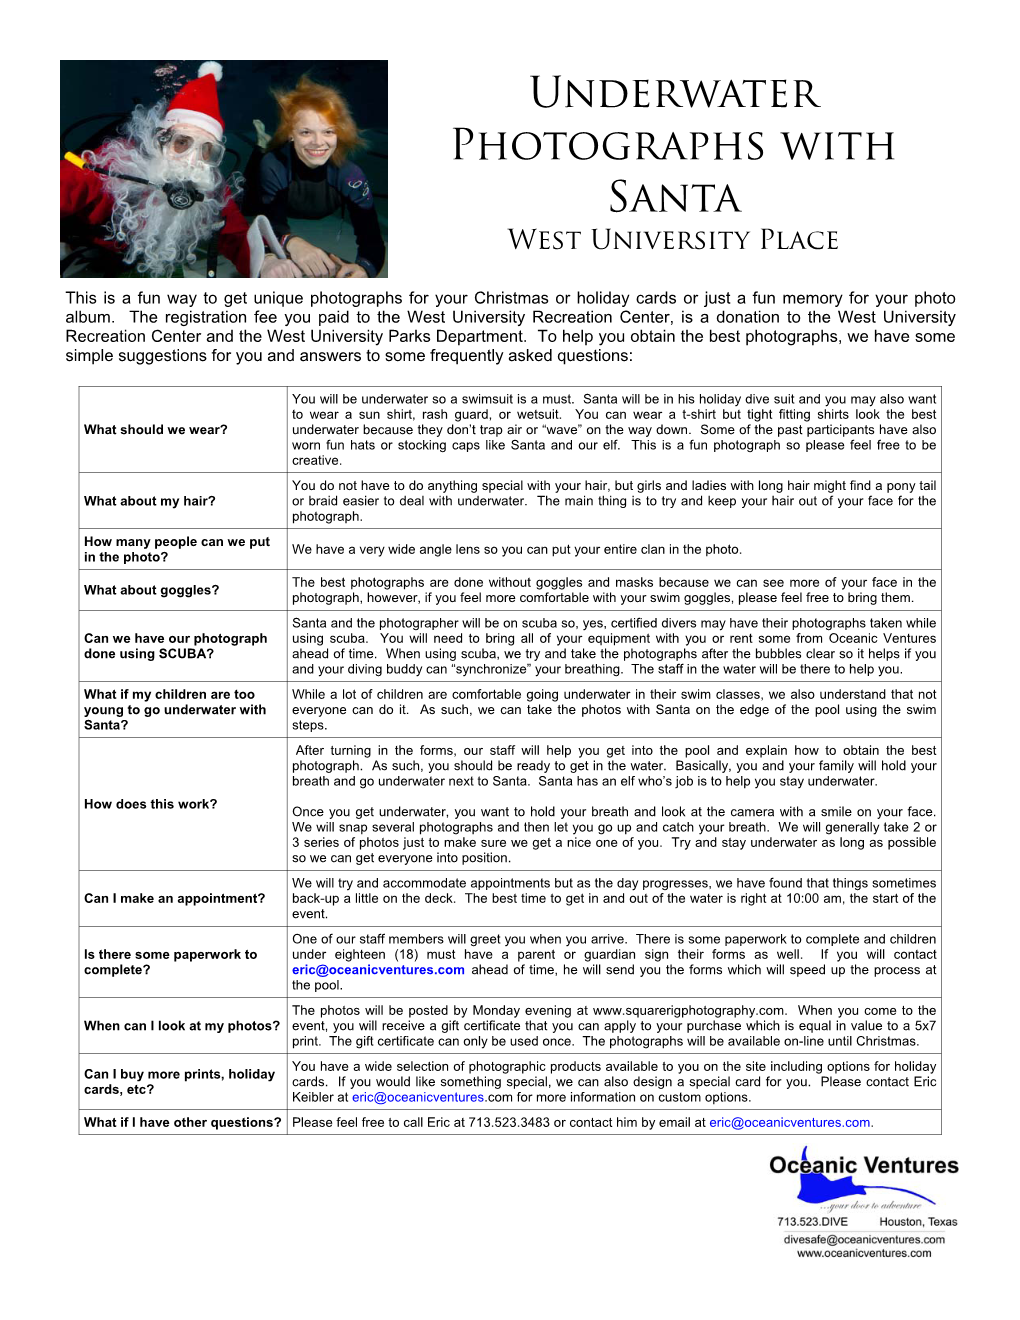 HOLIDAY Scuba with Santa FAQ.Pub